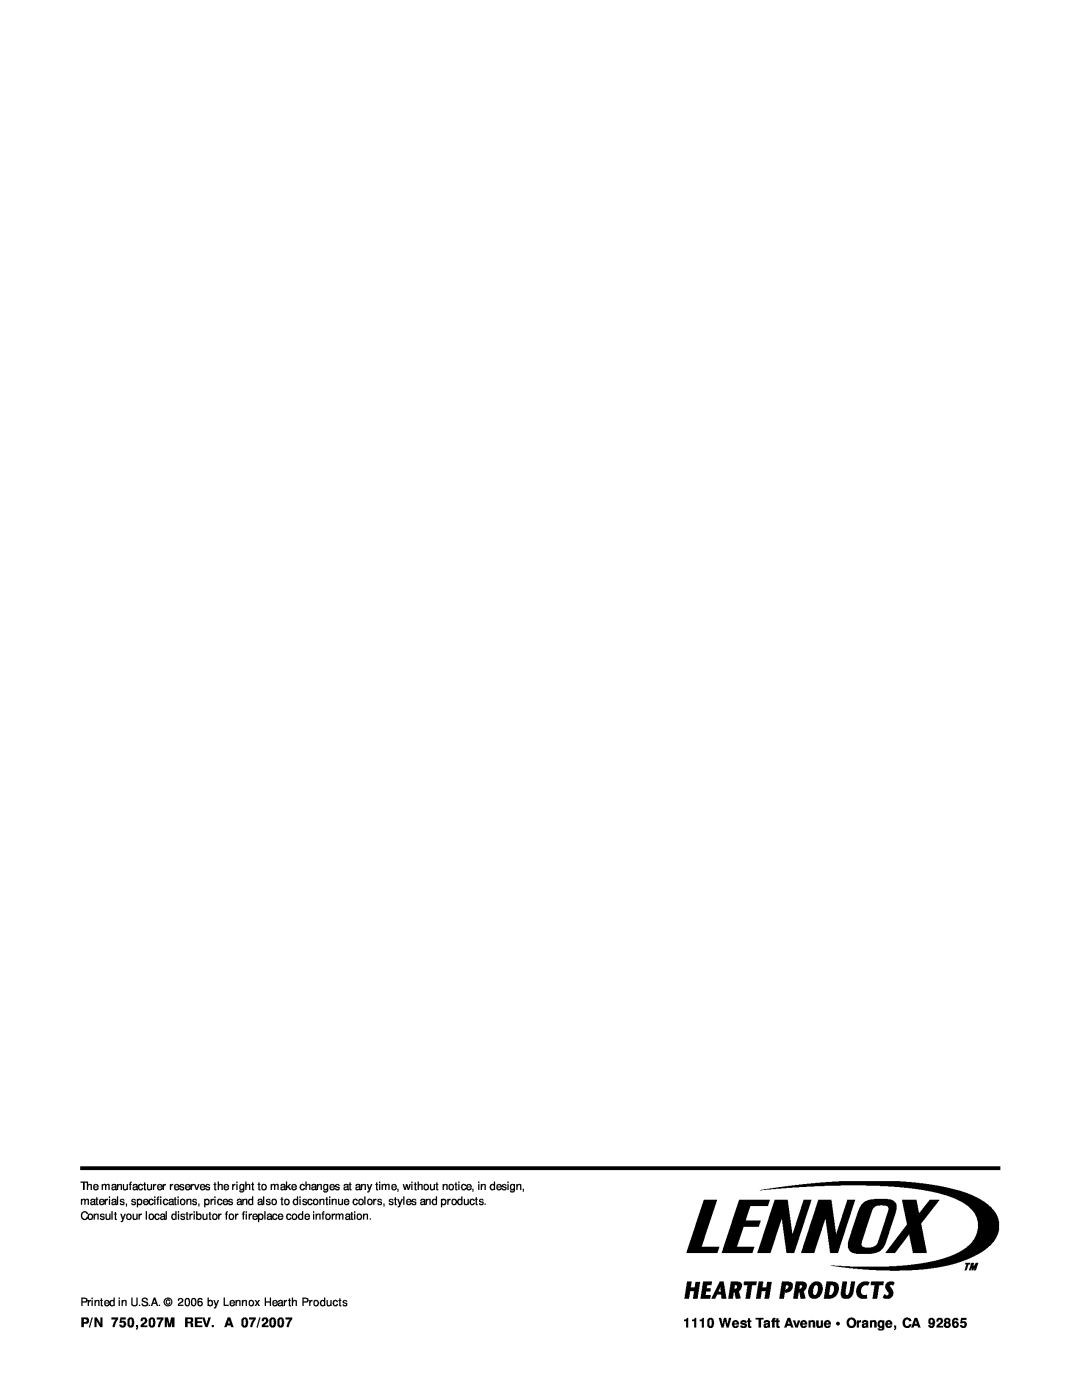 Lennox Hearth SV4.5CTS Series, SV8CTS series instruction sheet P/N 750,207M REV. A 07/2007, West Taft Avenue Orange, CA 